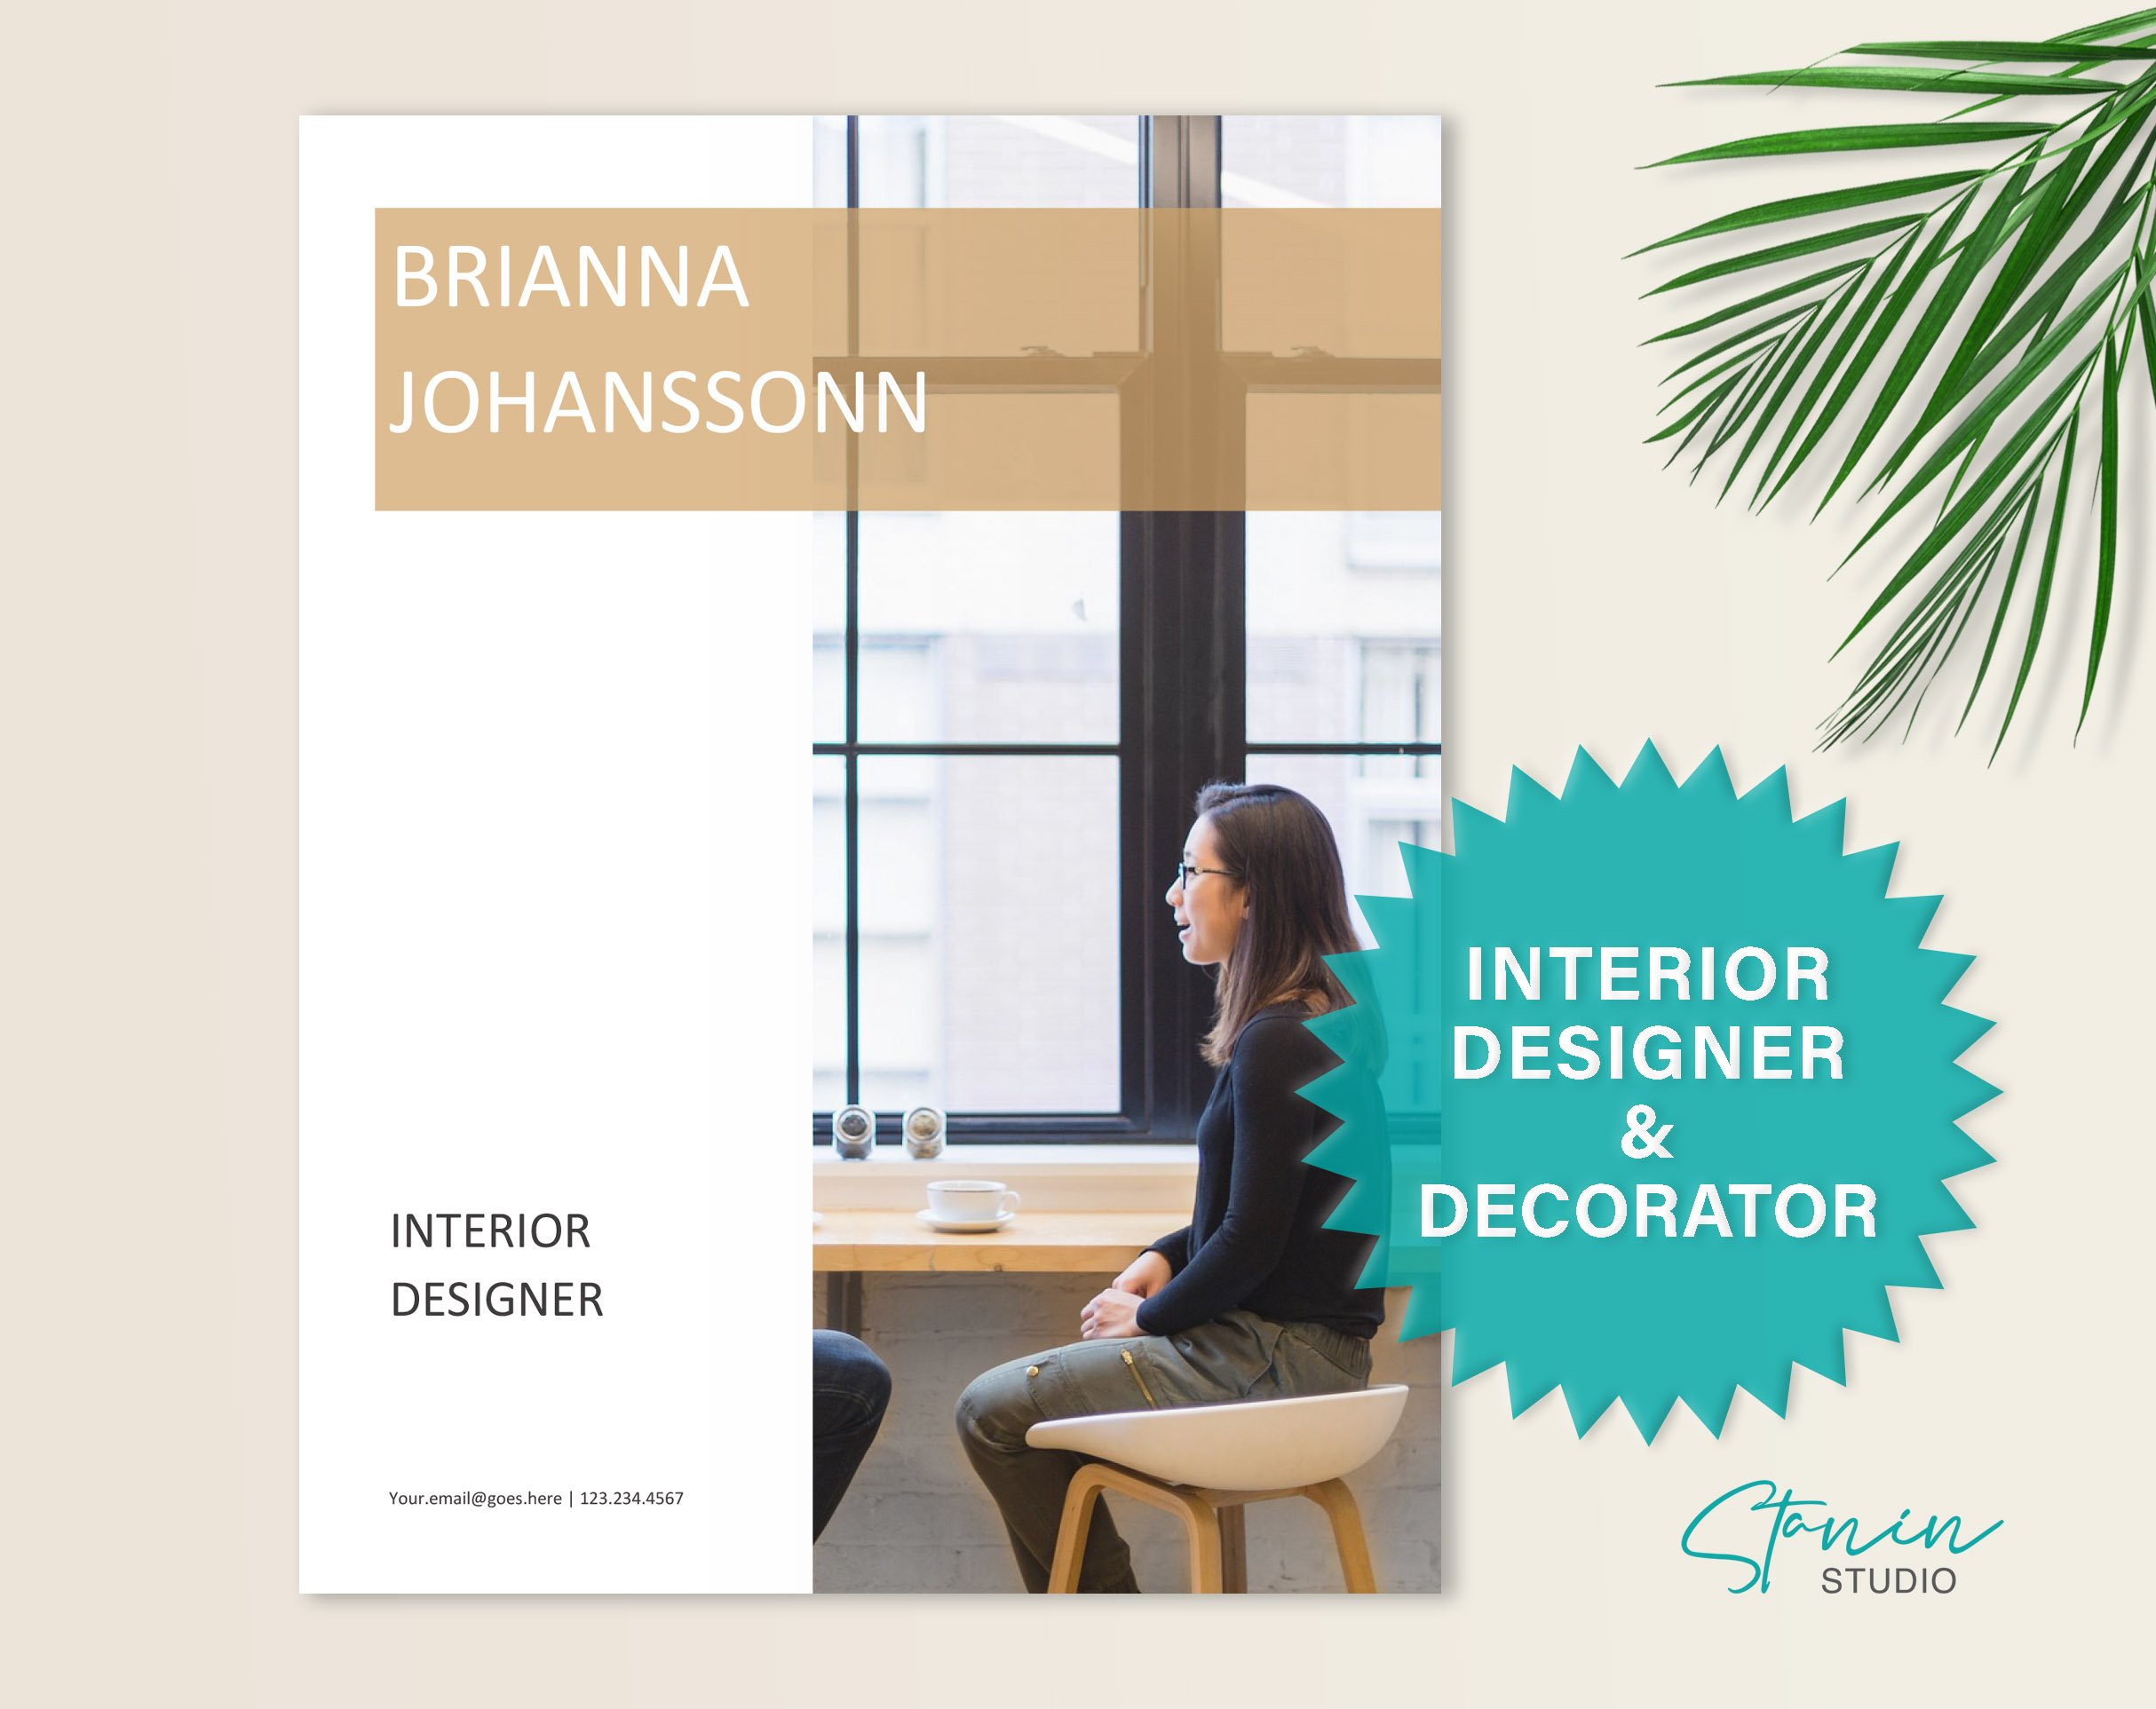 Interior Designer Resume Word cover image.